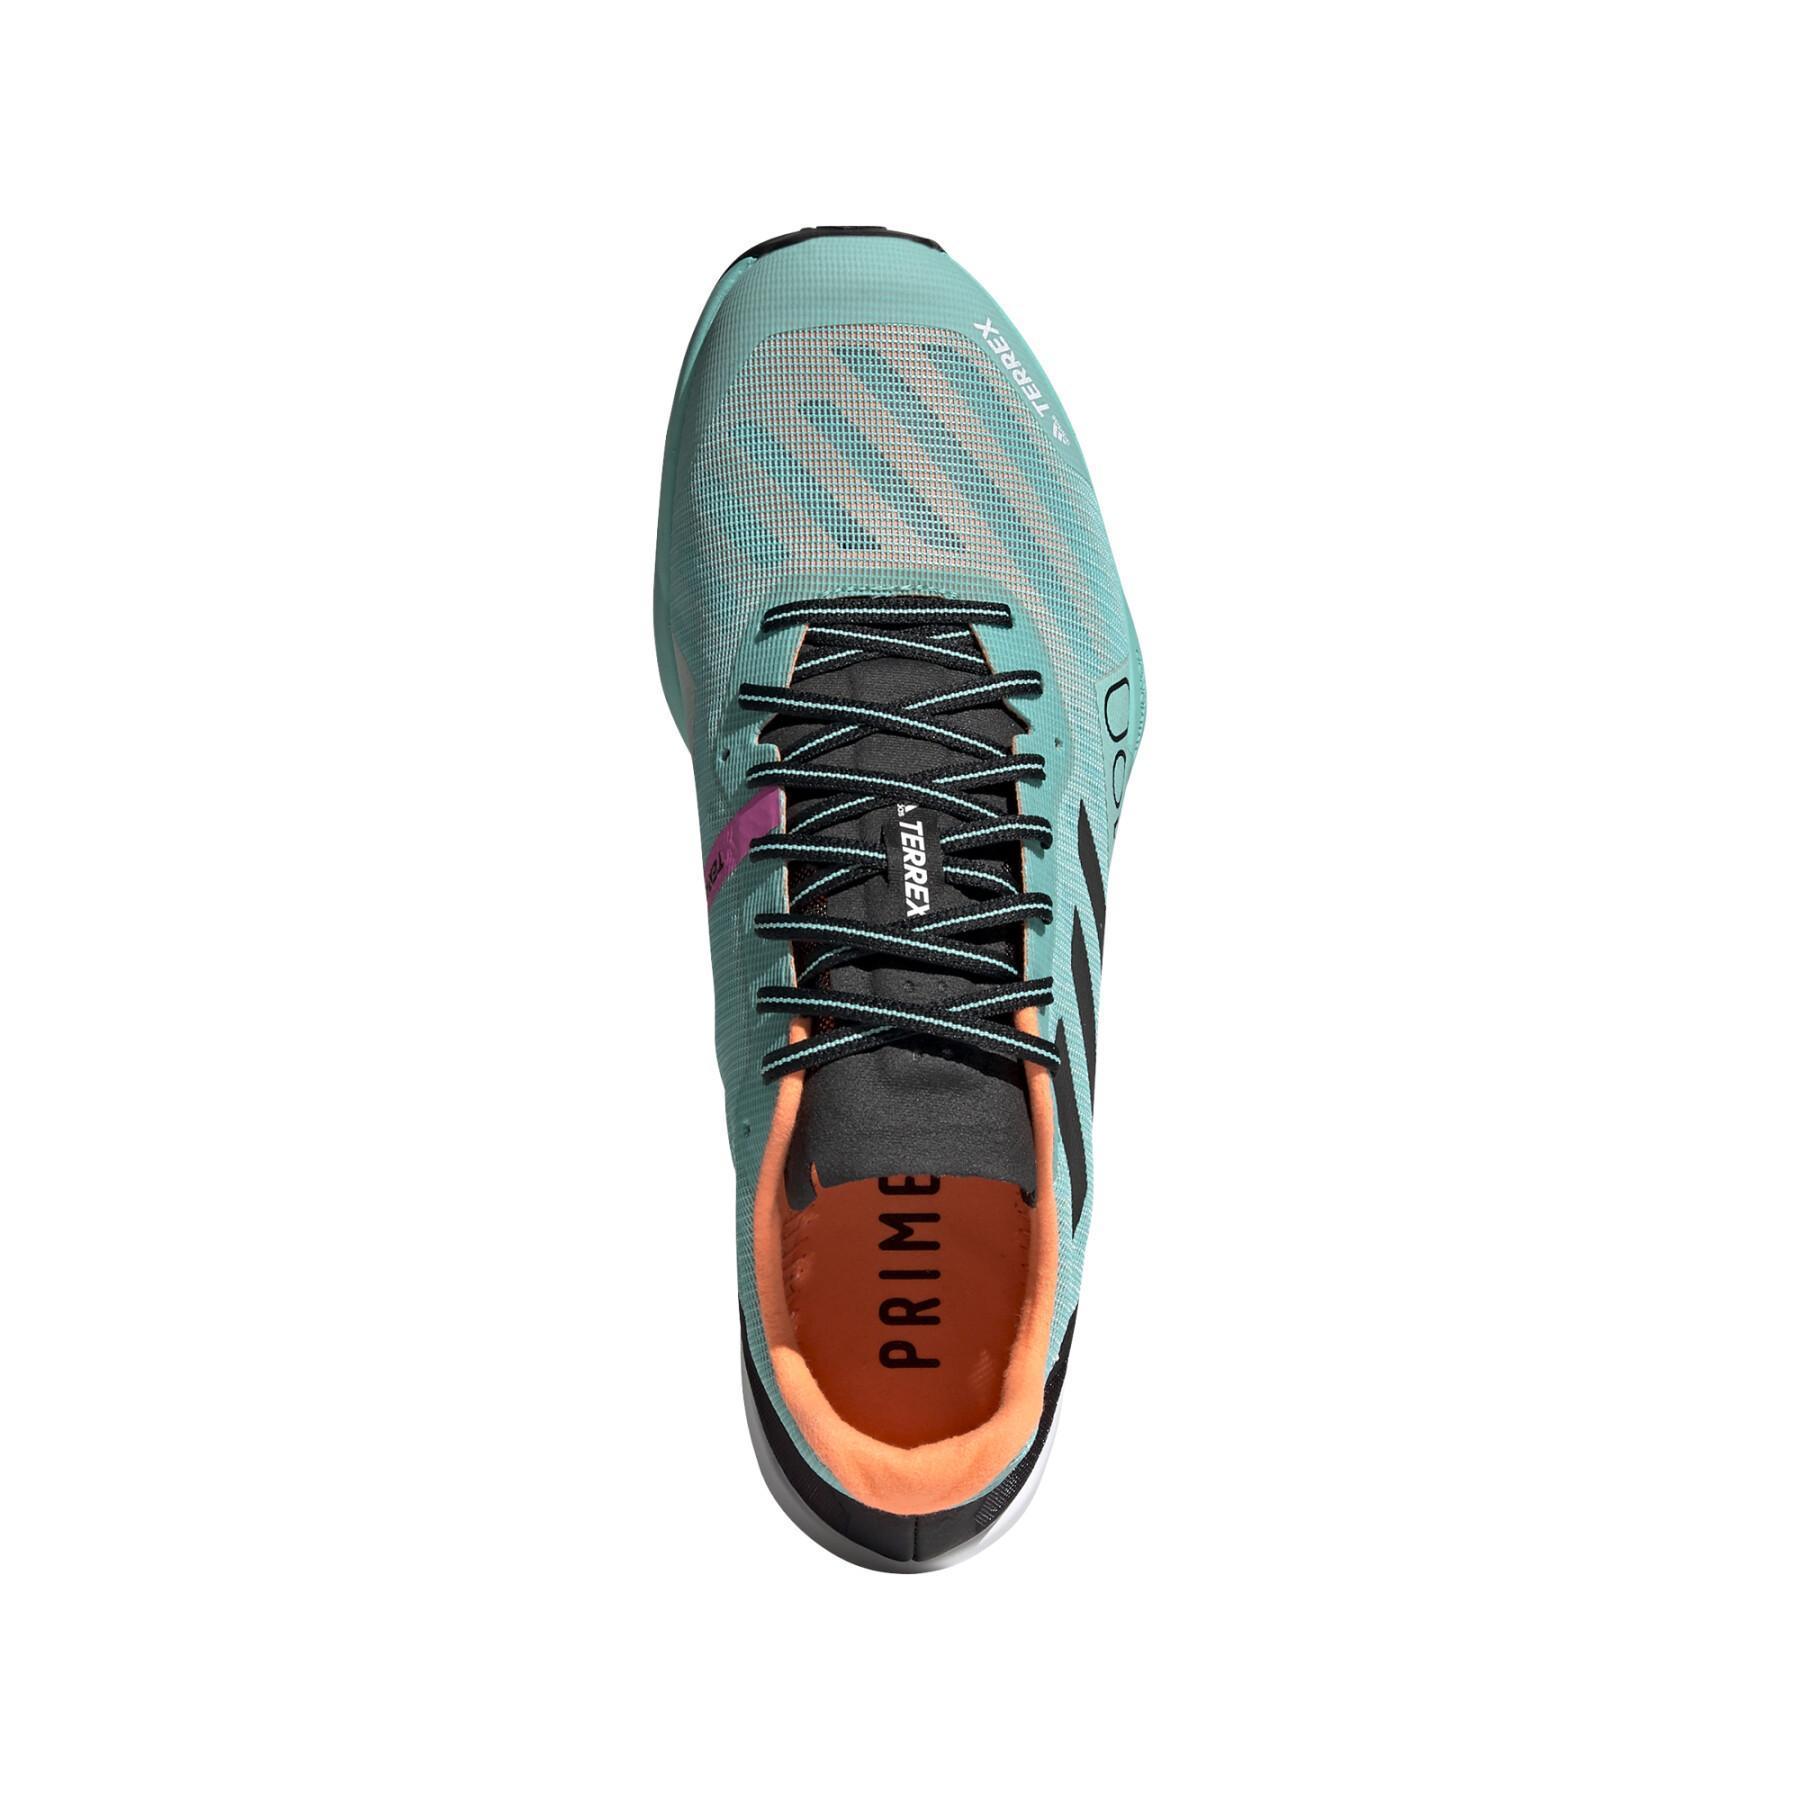 Trail shoes adidas Terrex Speed Pro